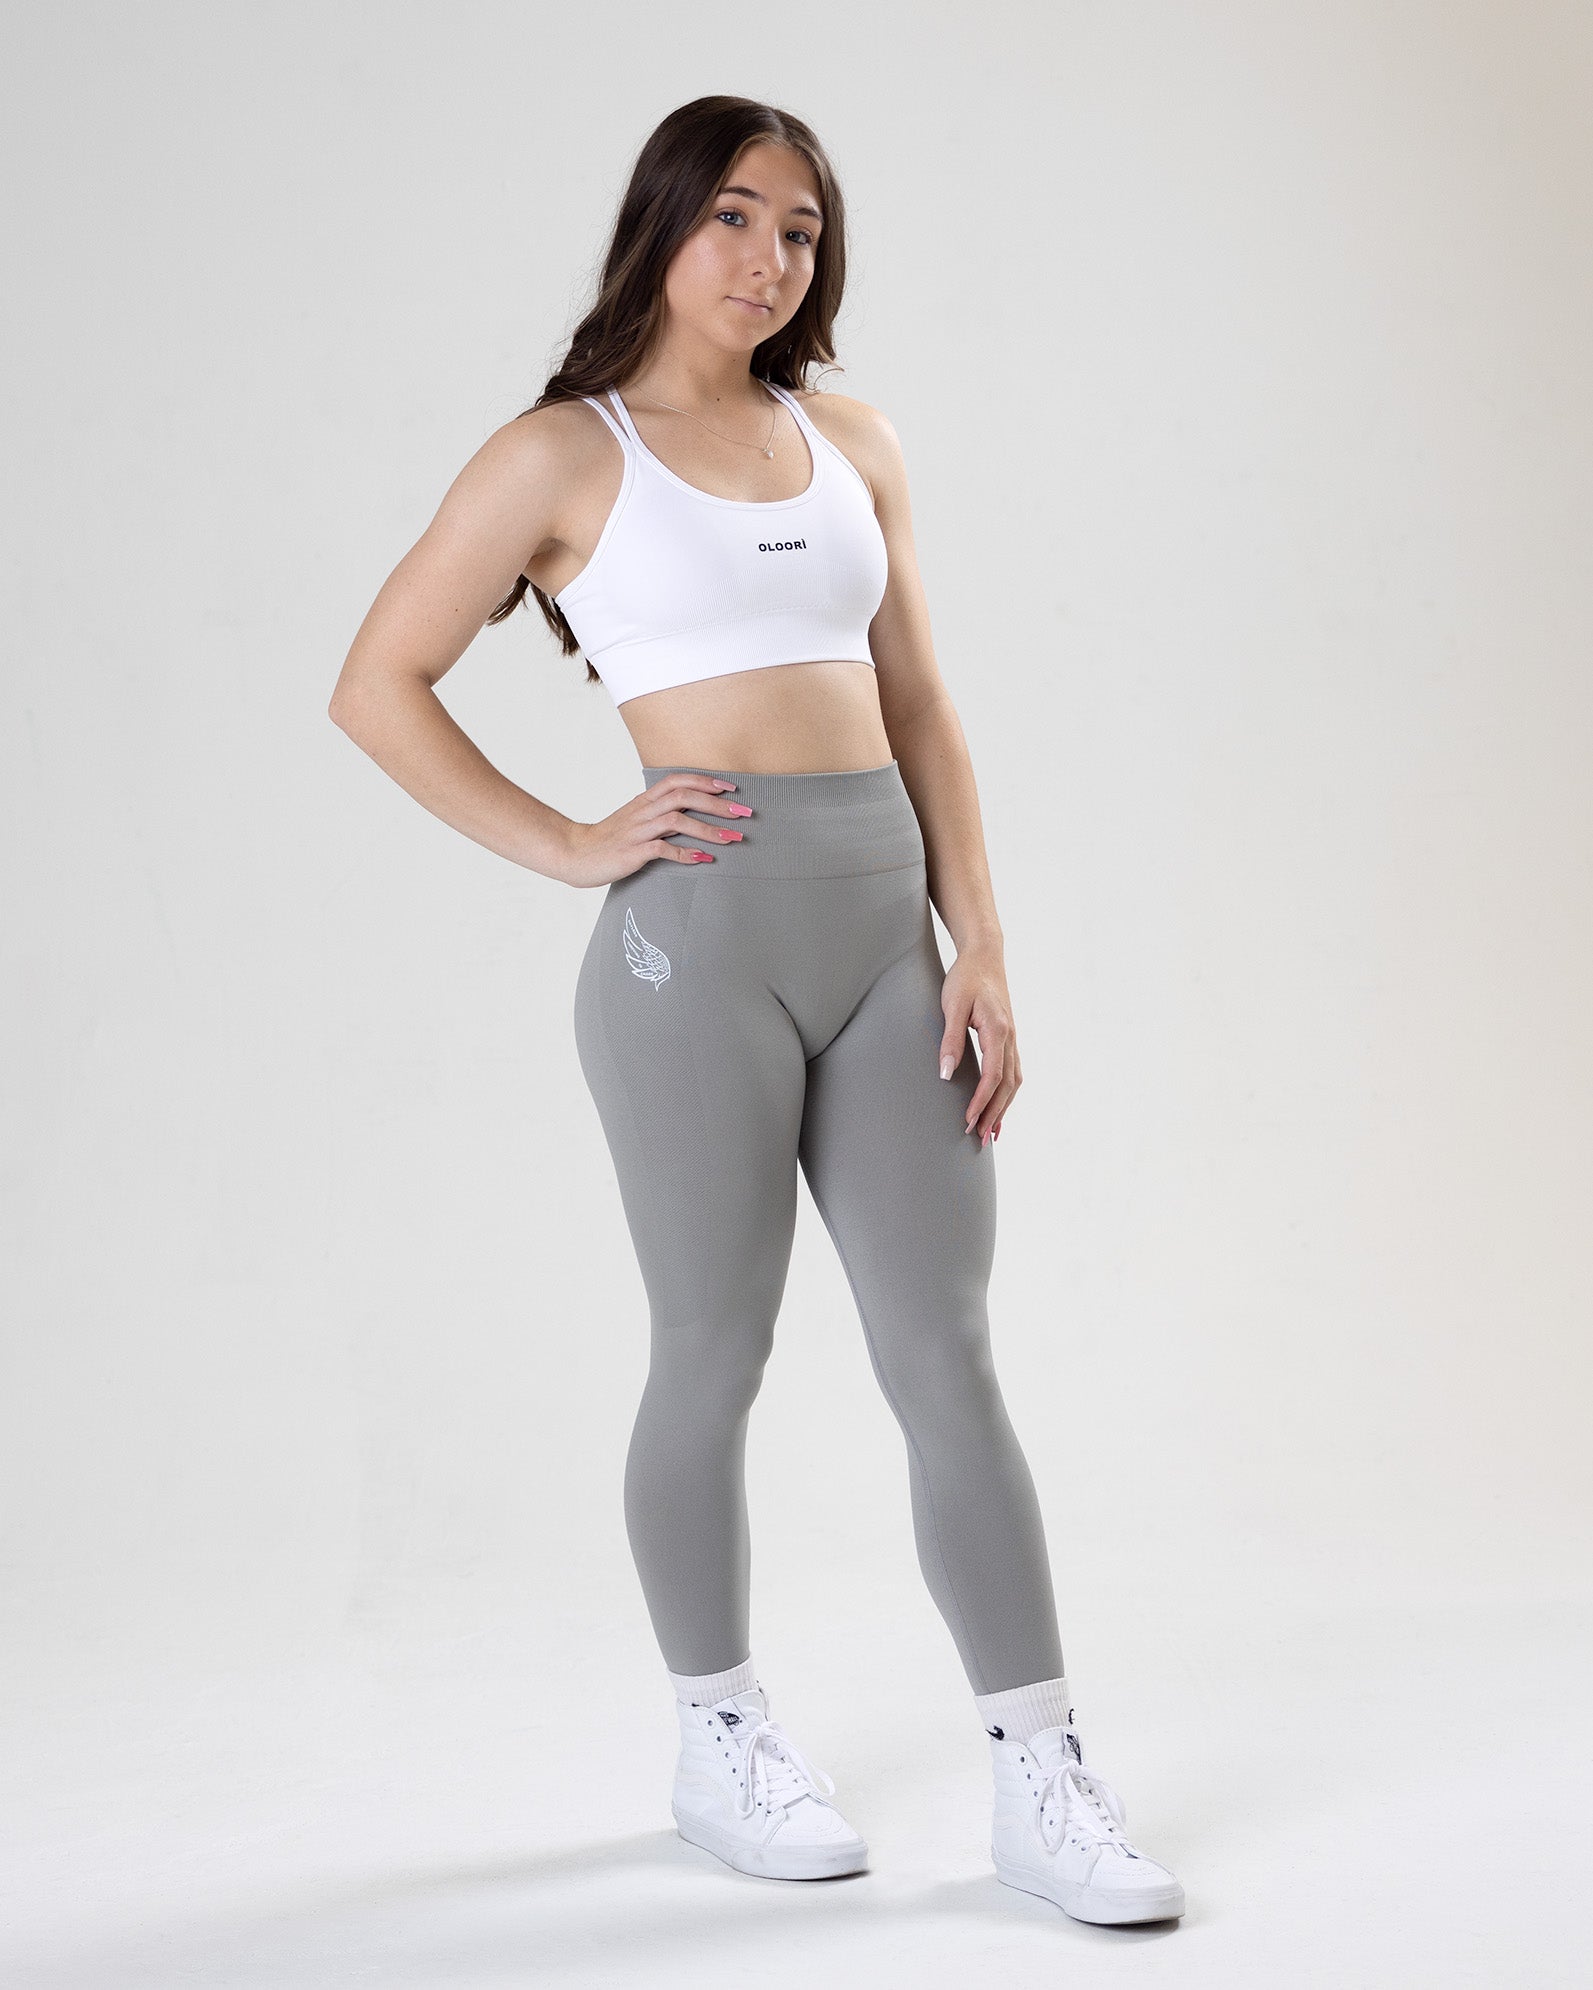 LLU Designer Womens Seamless Sports Leggings Comfortable Fabric For Yoga,  Running, And Hip Training From Premium_fashion, $24.8